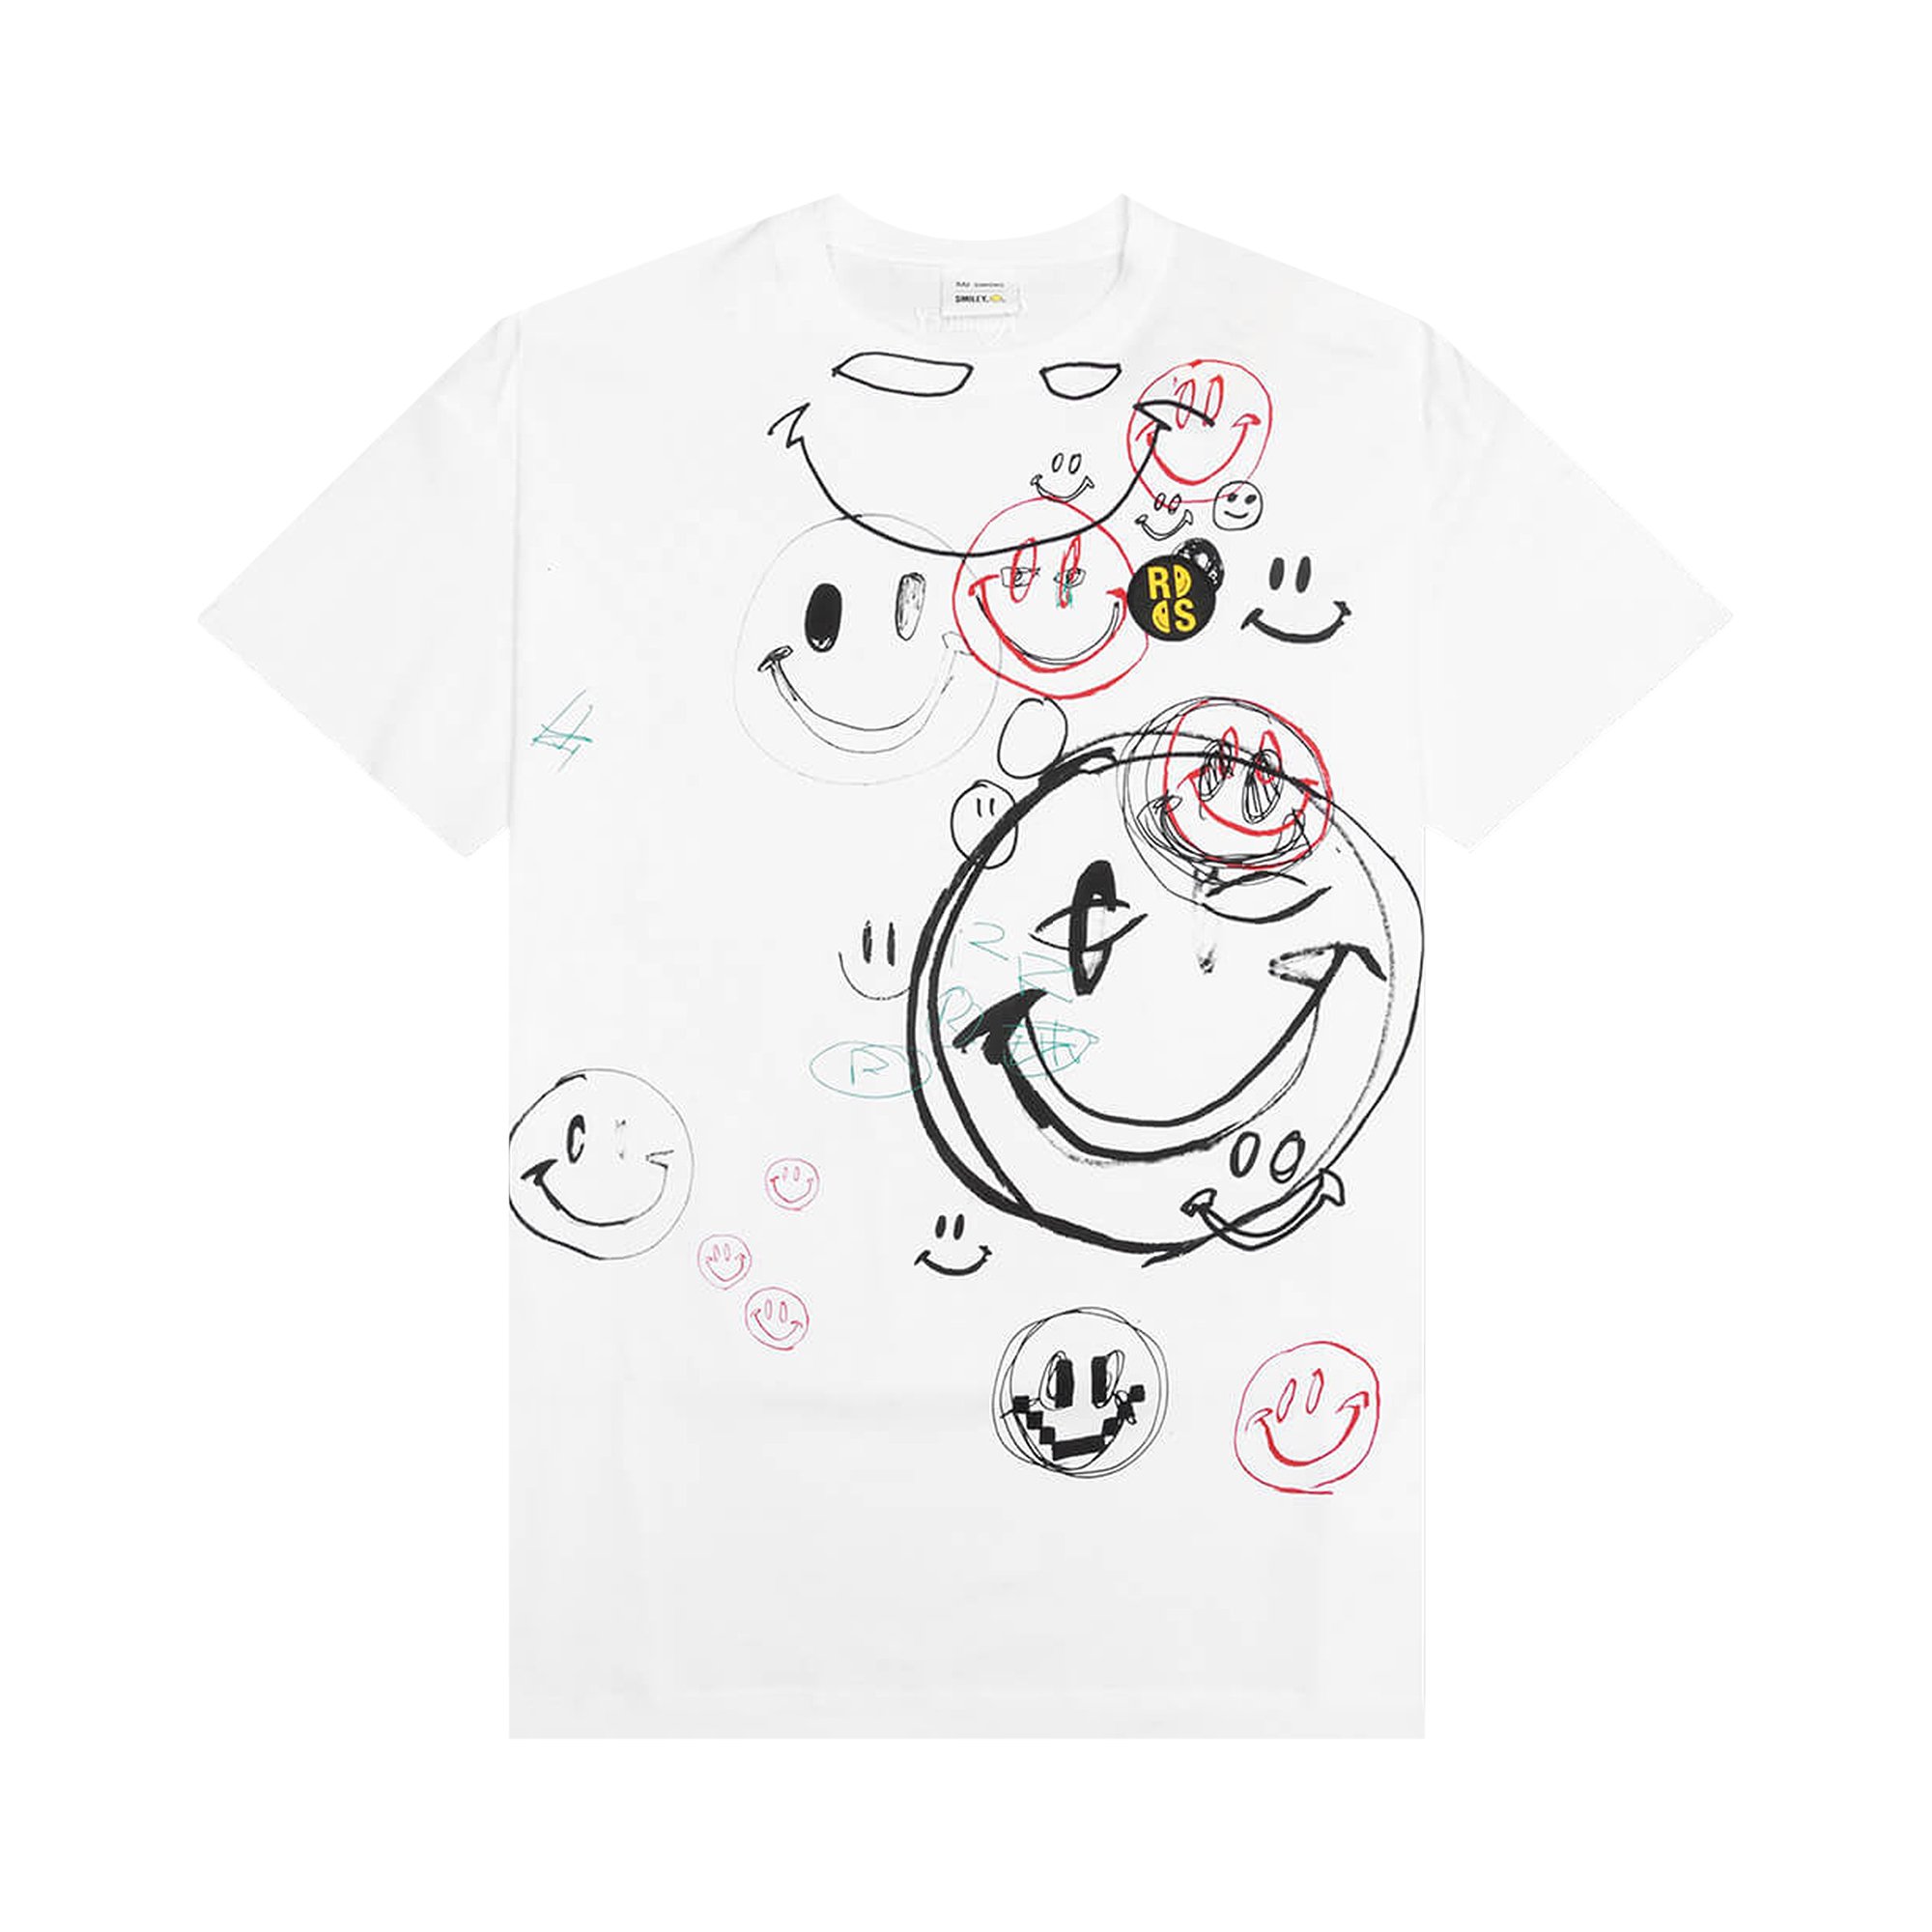 Buy Raf Simons x Smiley Student Drawing Print Big Fit T-Shirt 